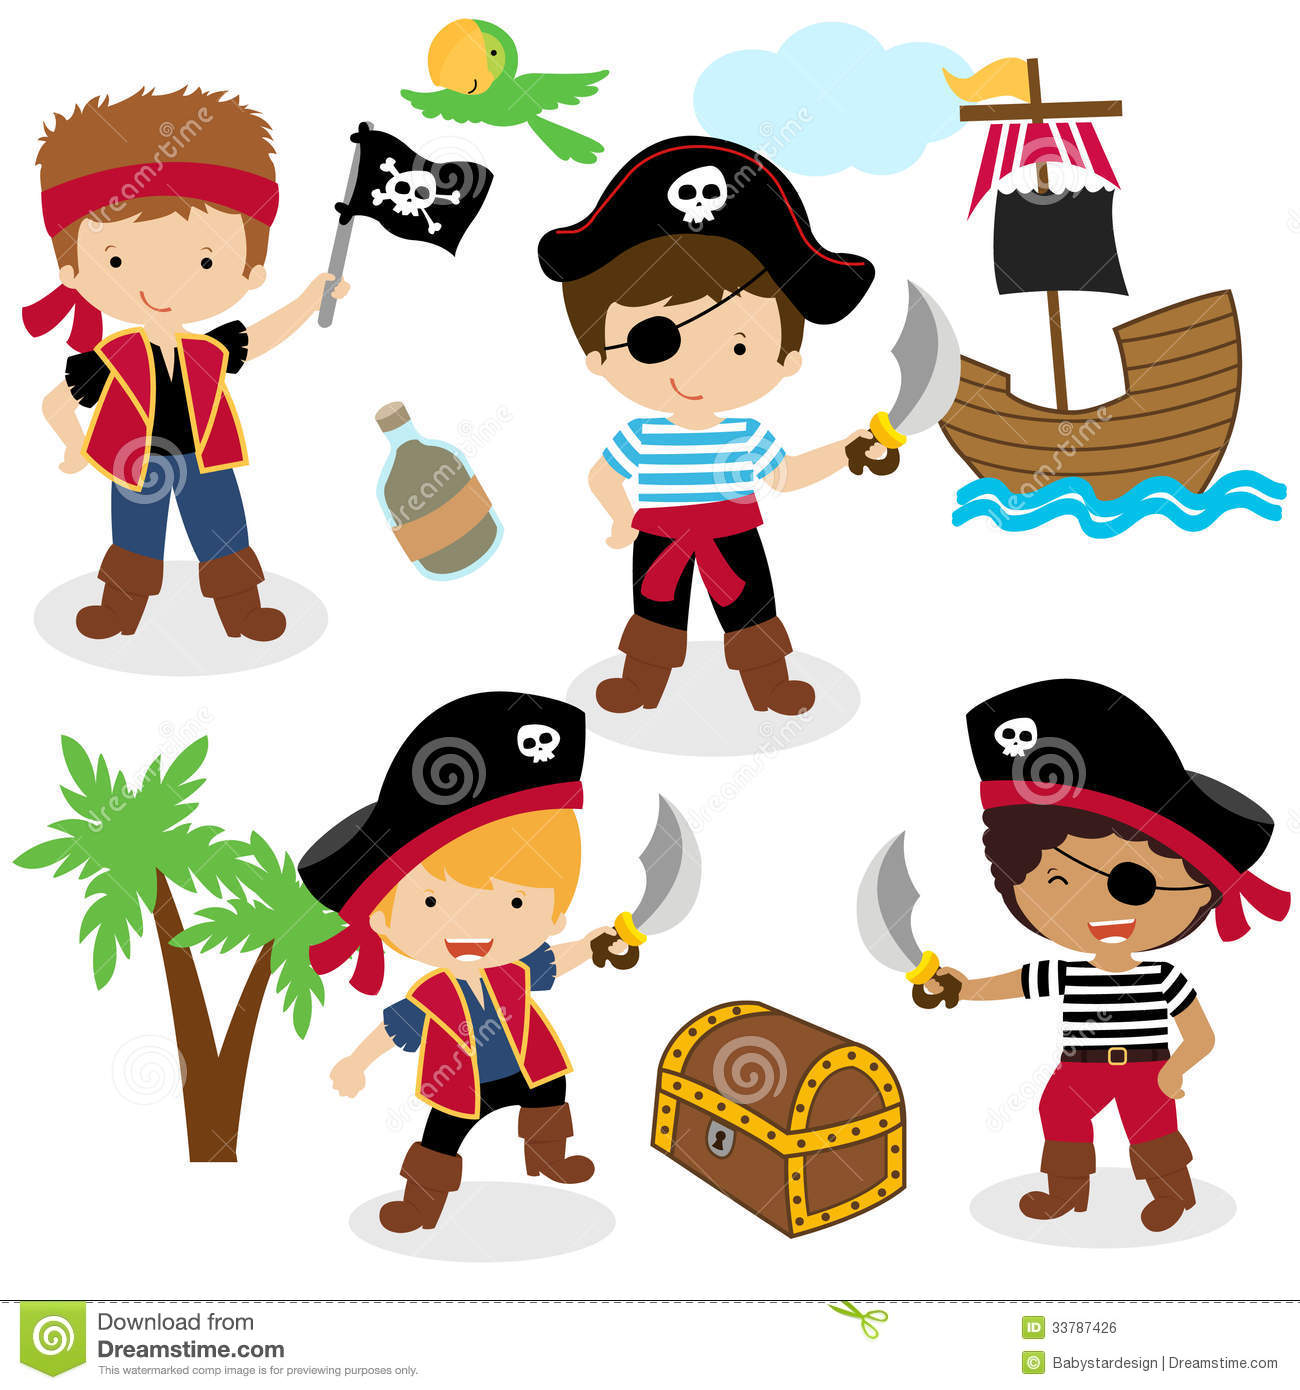 Cute Set Of Children Pirates Royalty Free Stock Image   Image